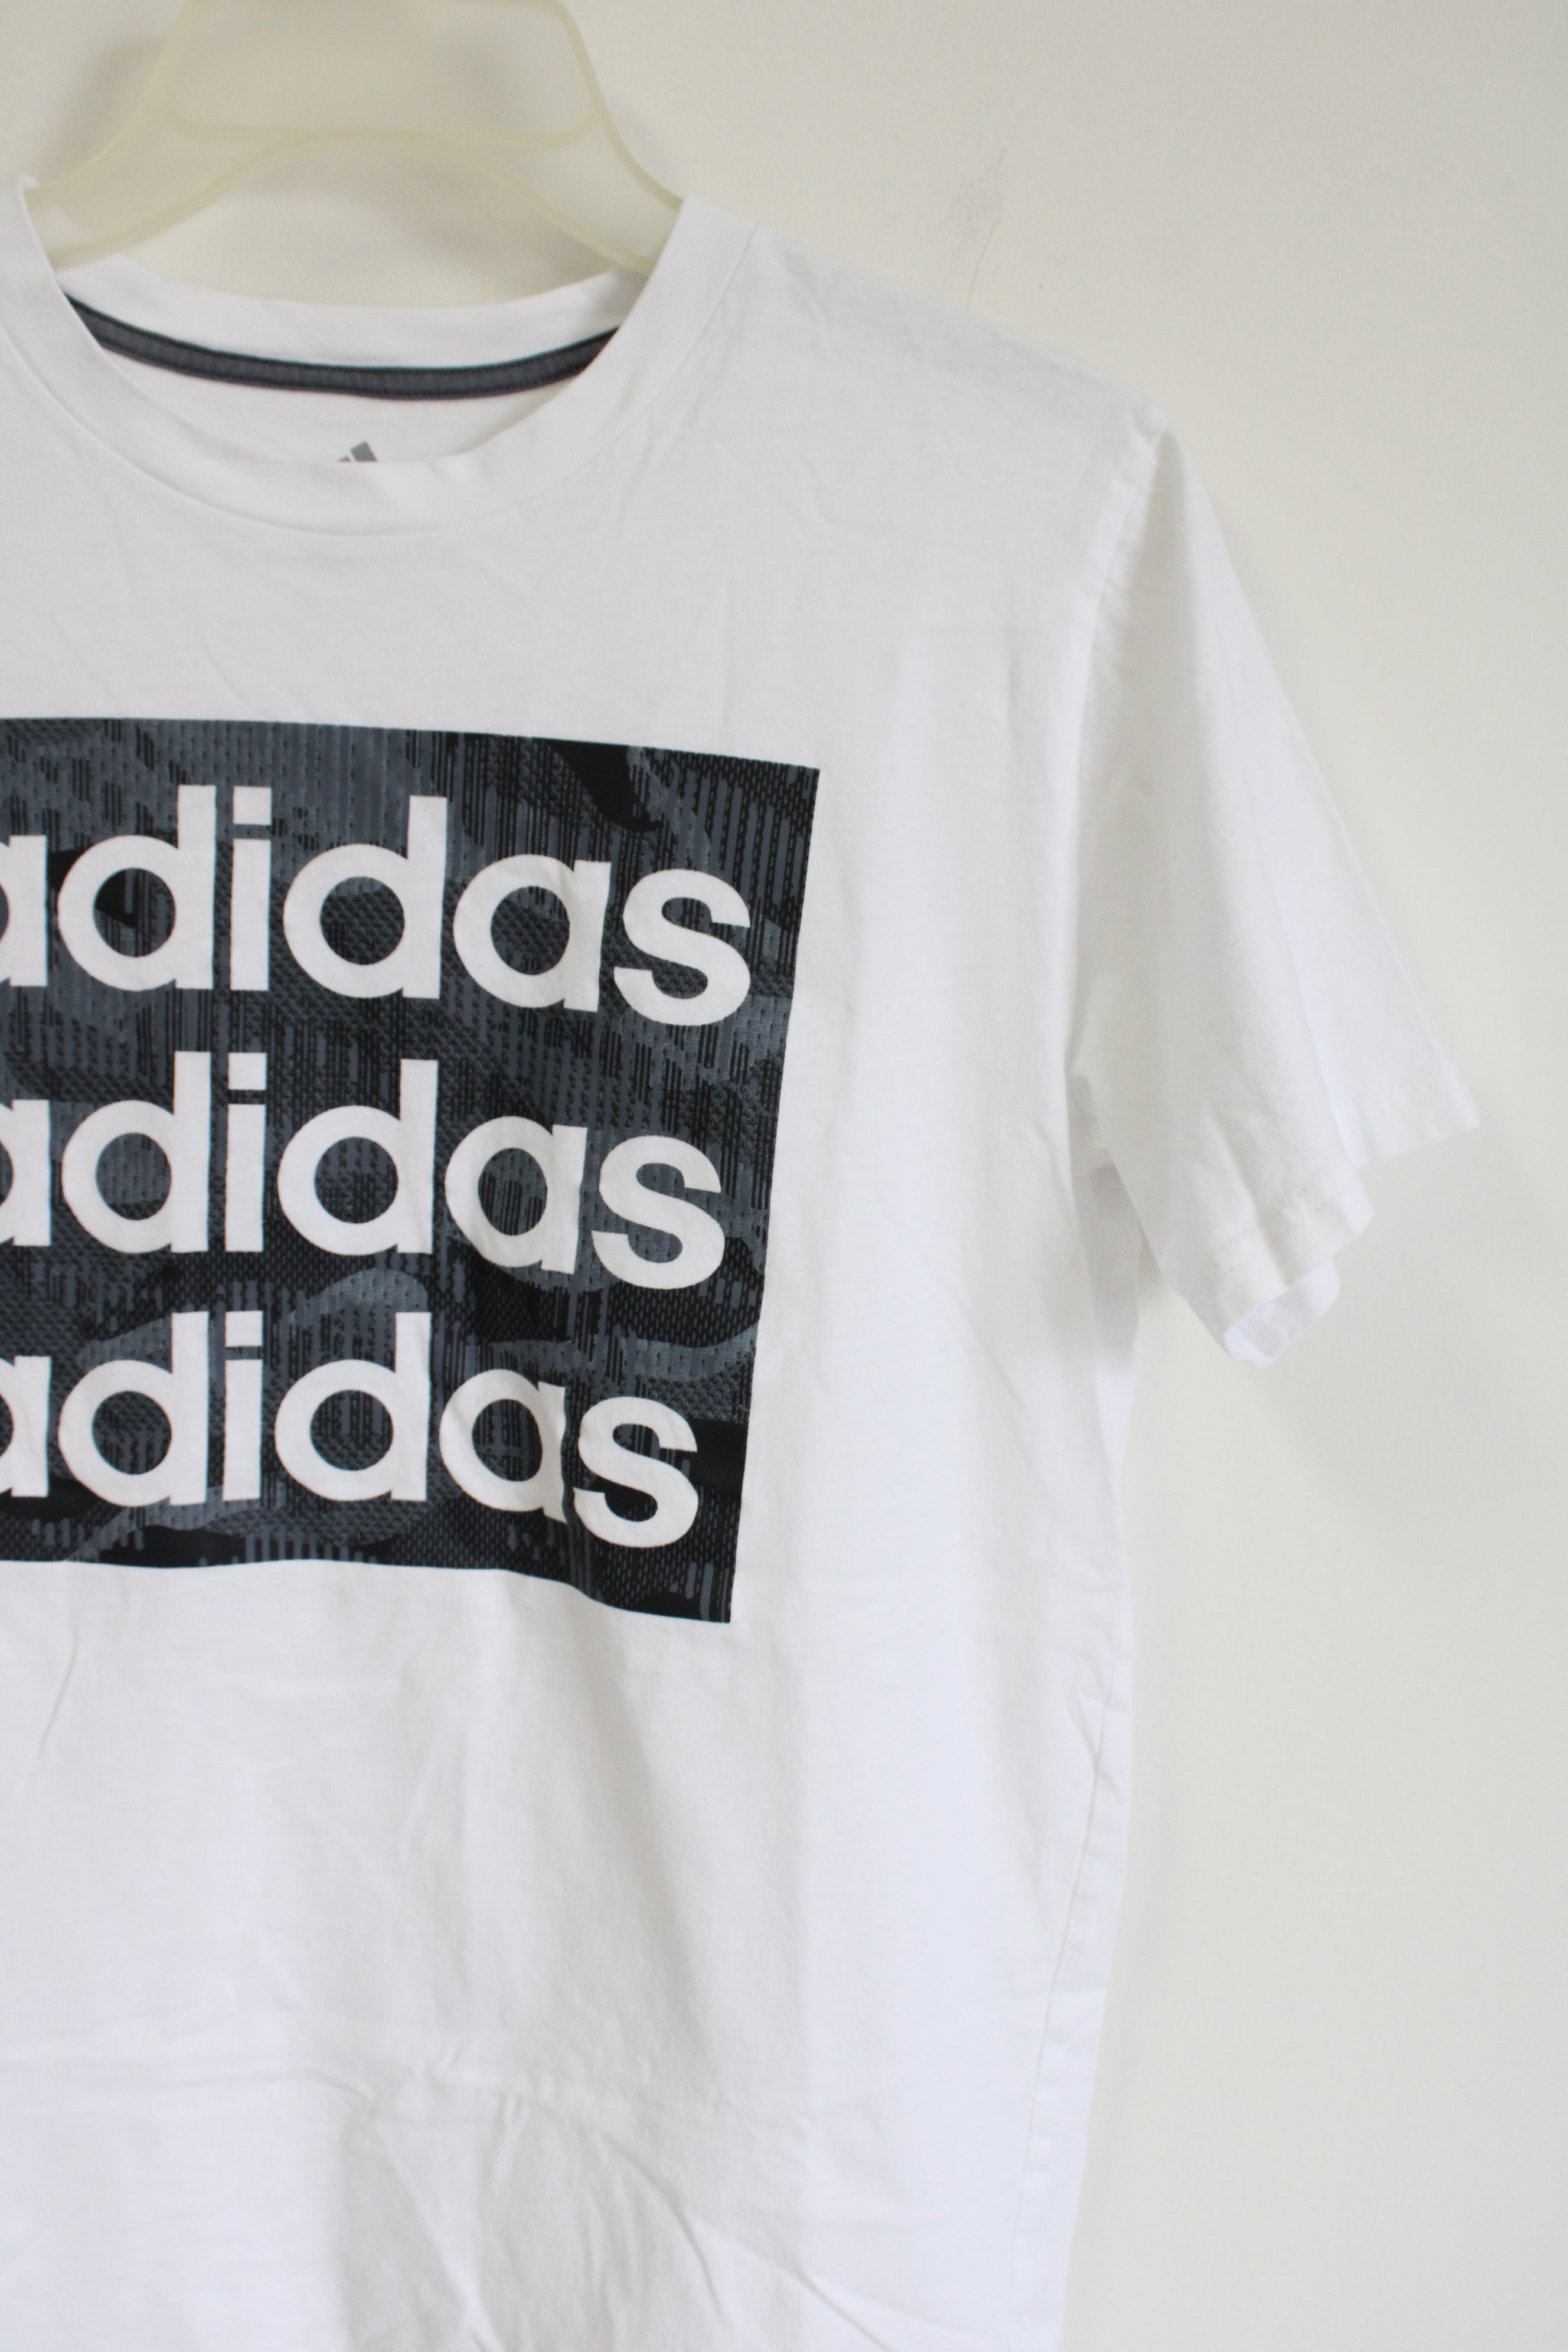 Adidas Logo White Tee | Youth L (14/16)